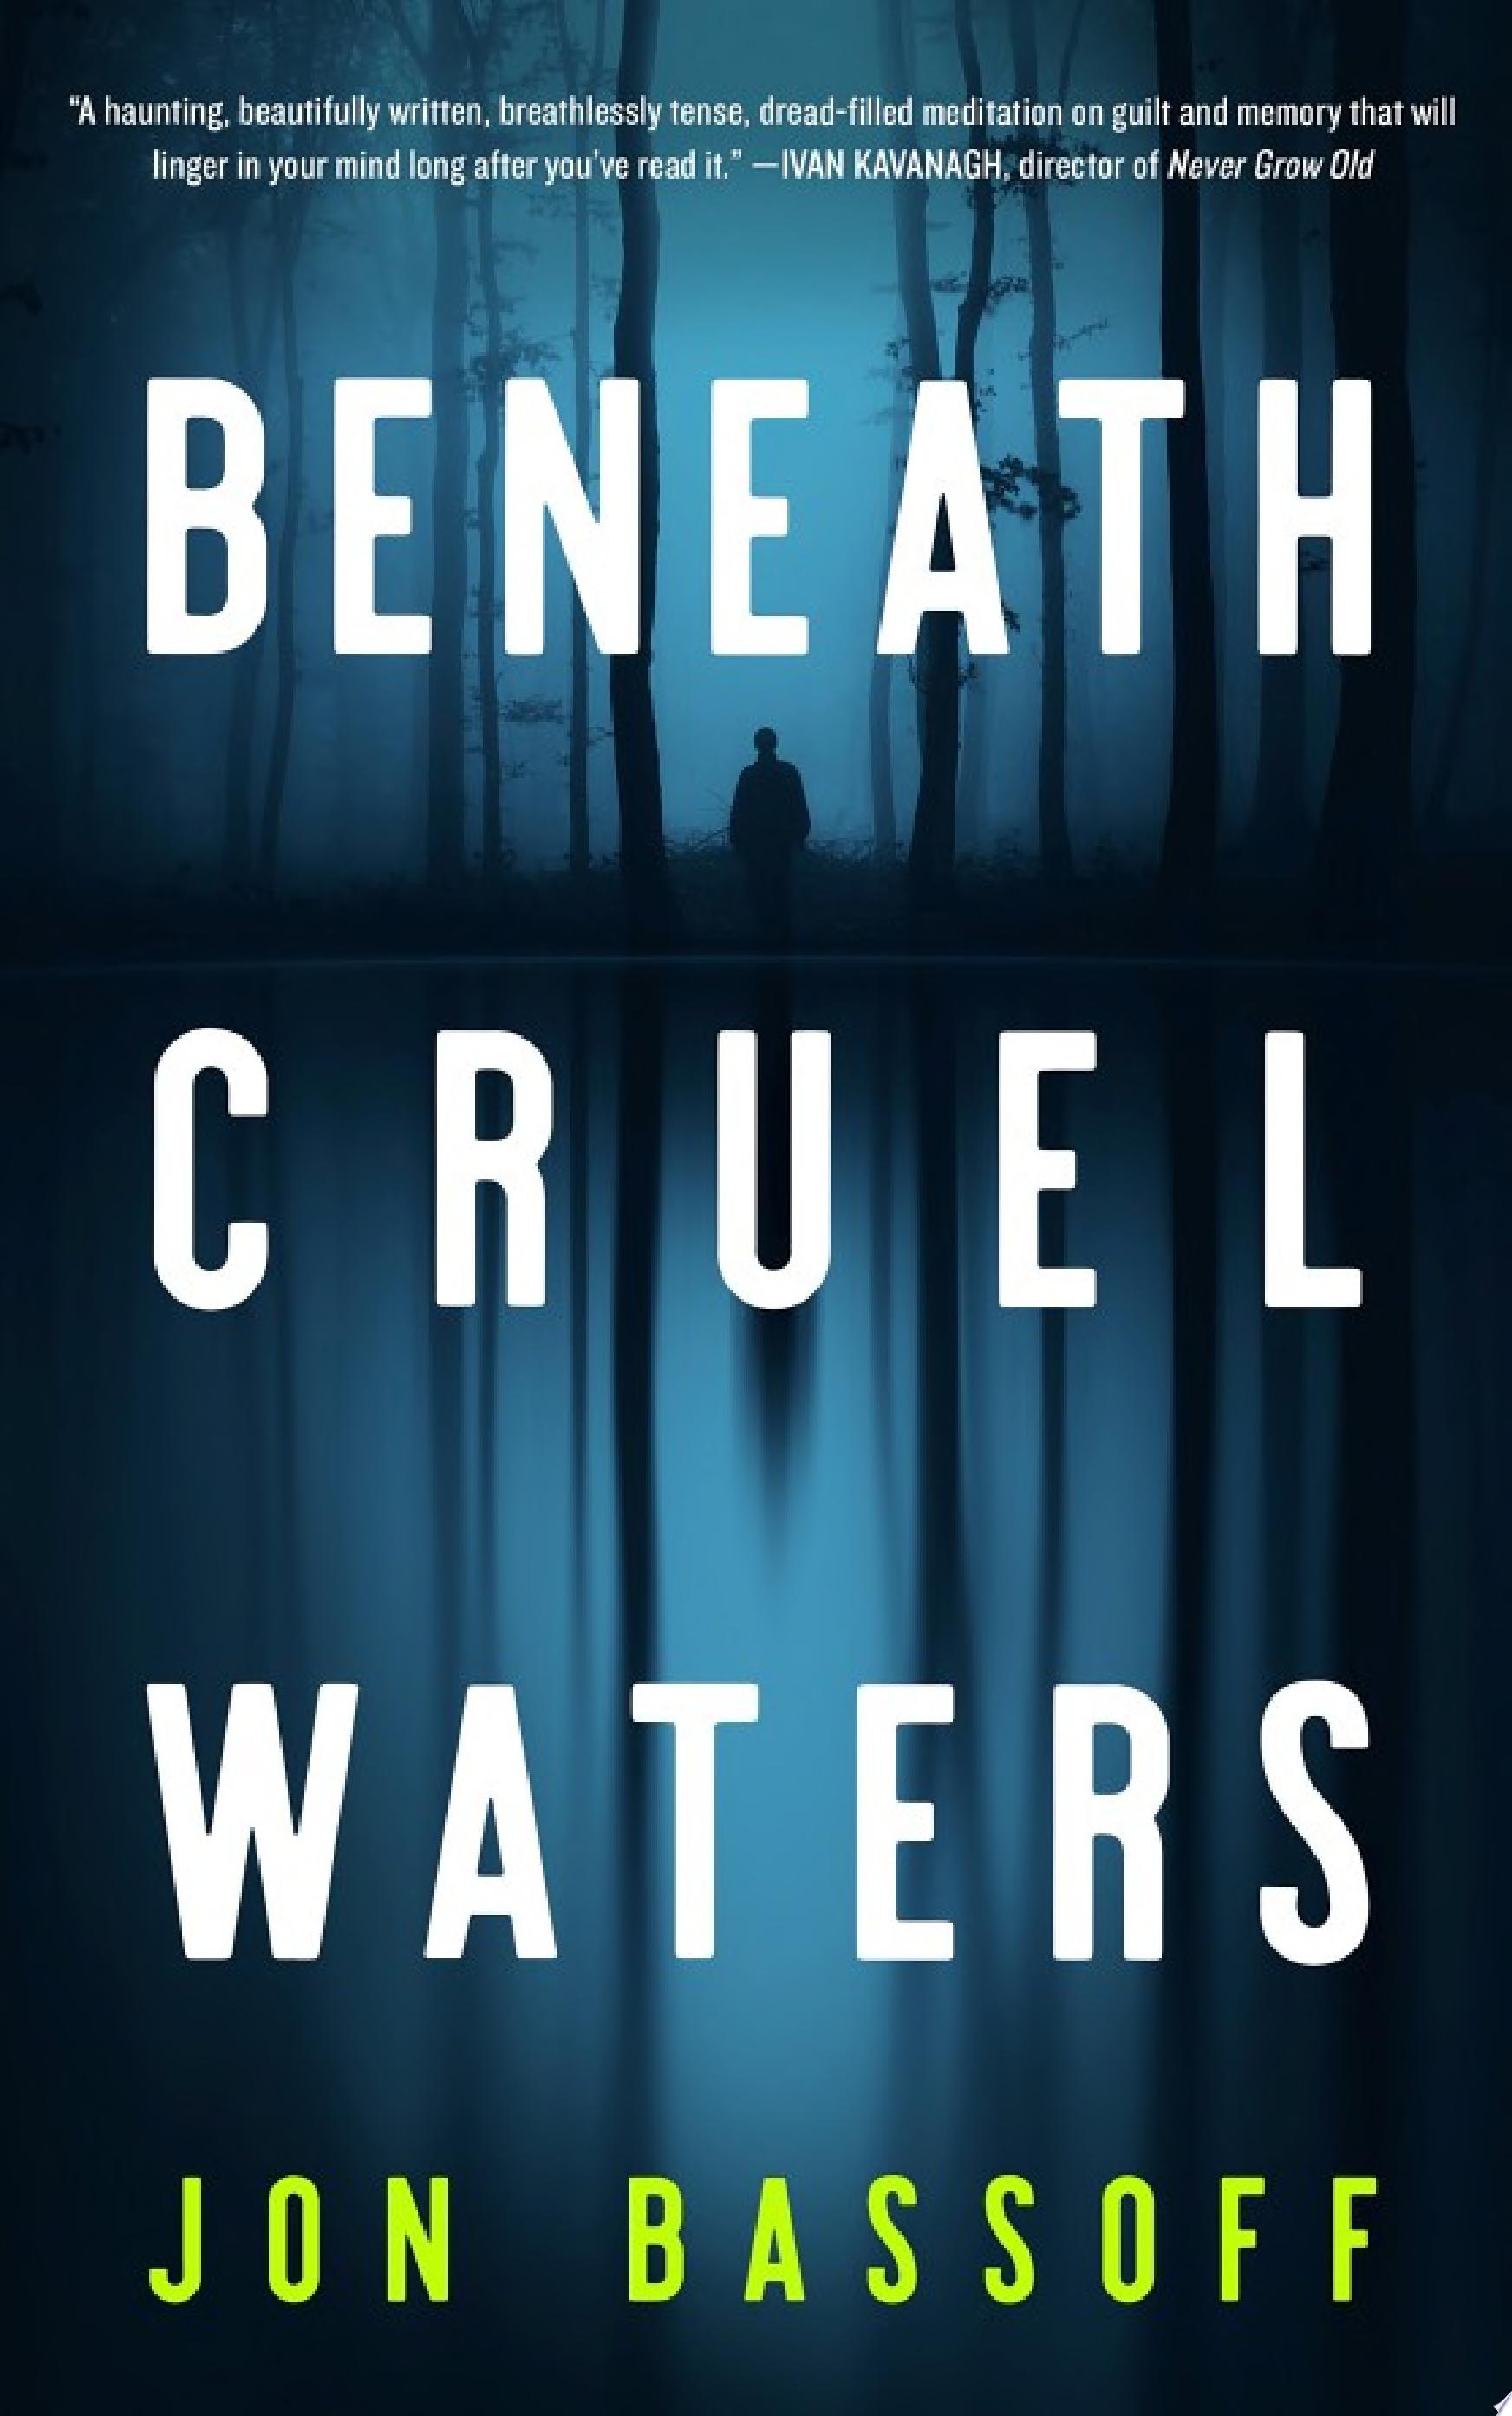 Image for "Beneath Cruel Waters"